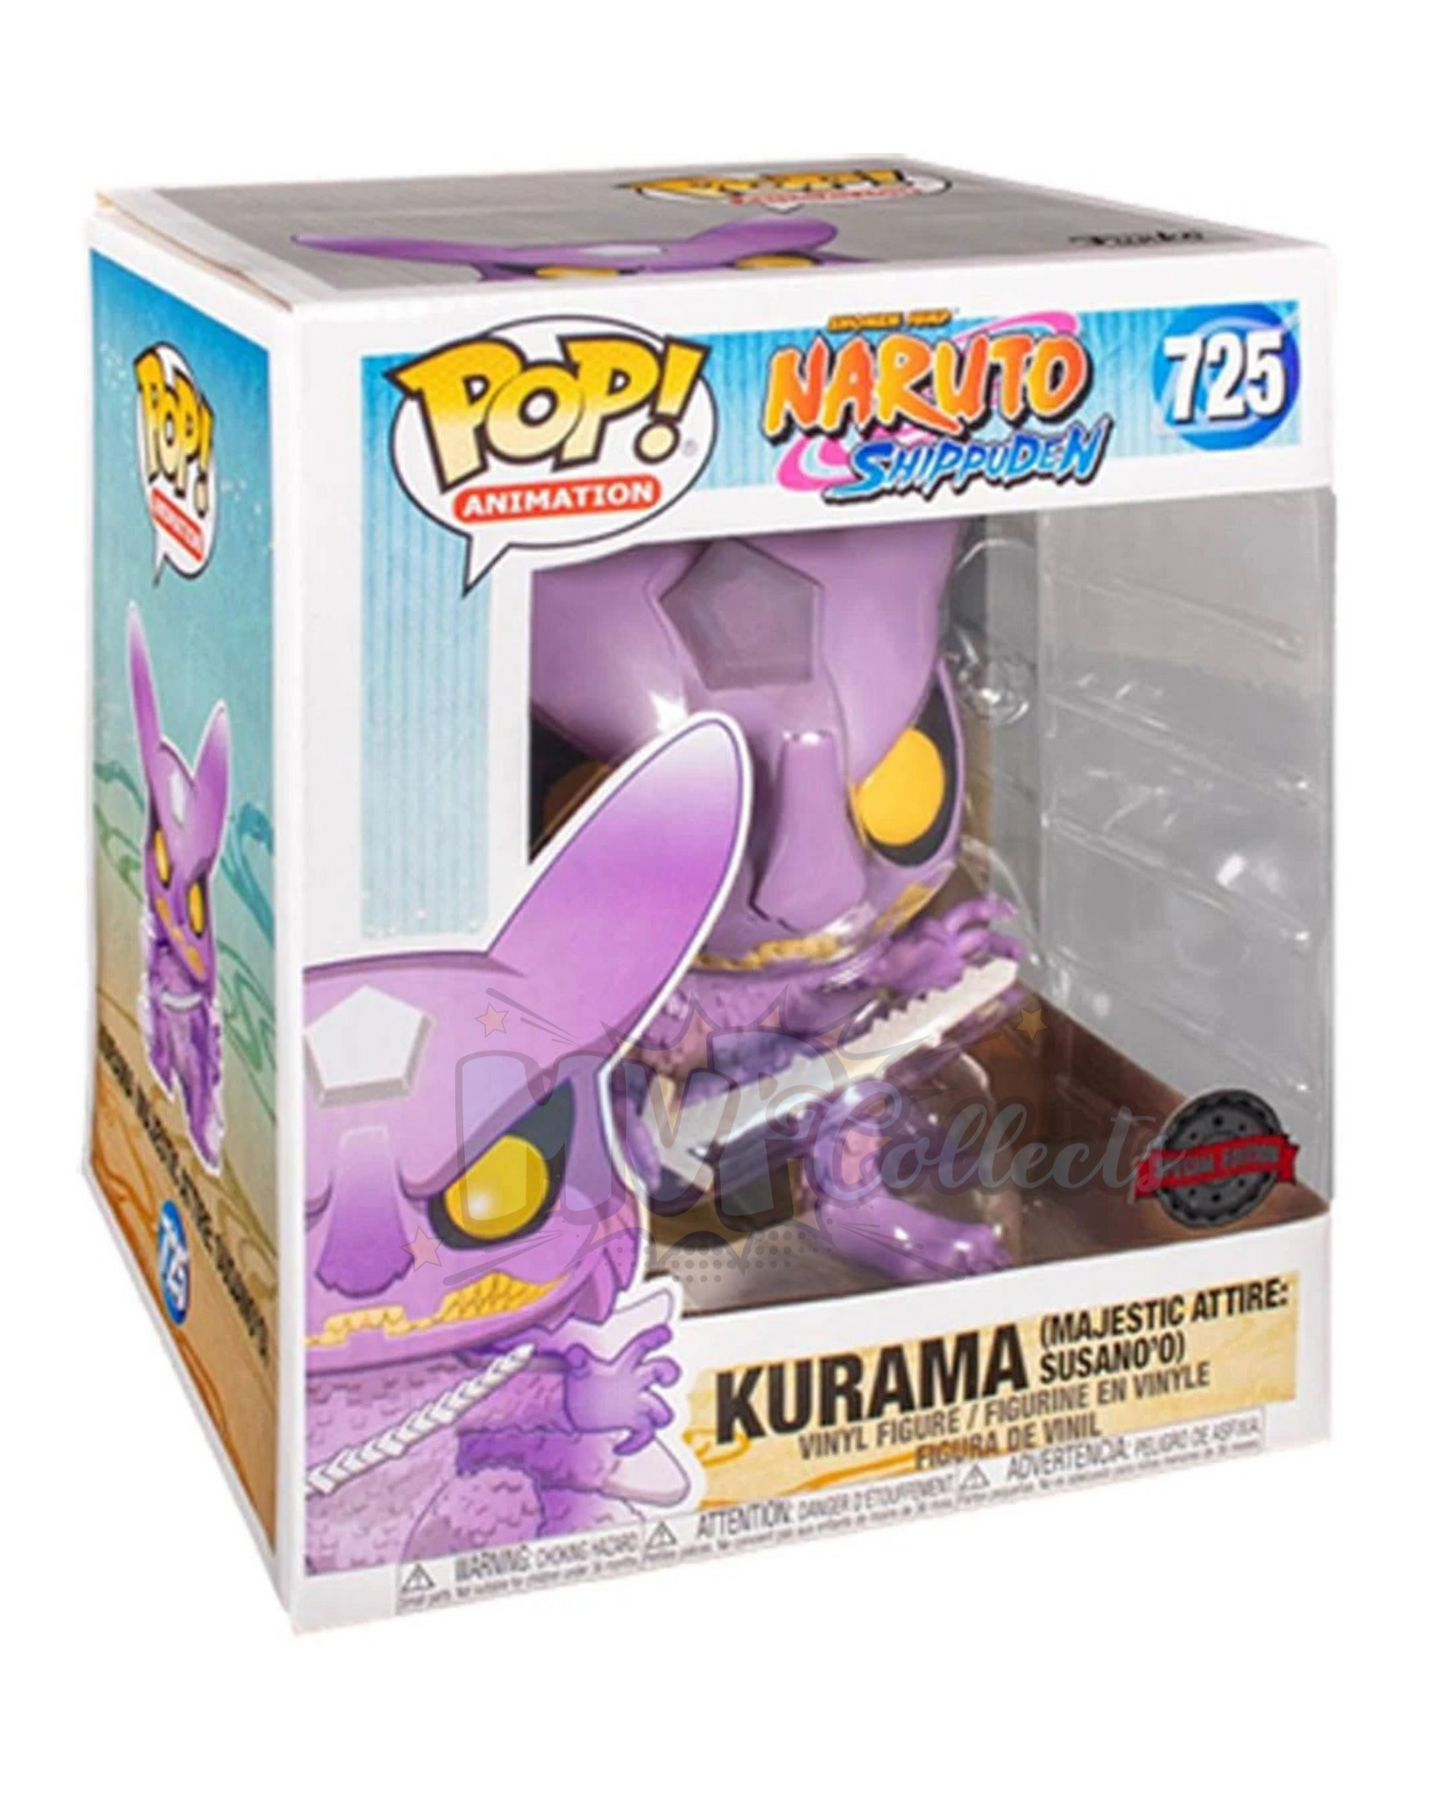 Kurama (Majestic Attire : Susano'o) POP! (Naruto) 725 SE 6inch